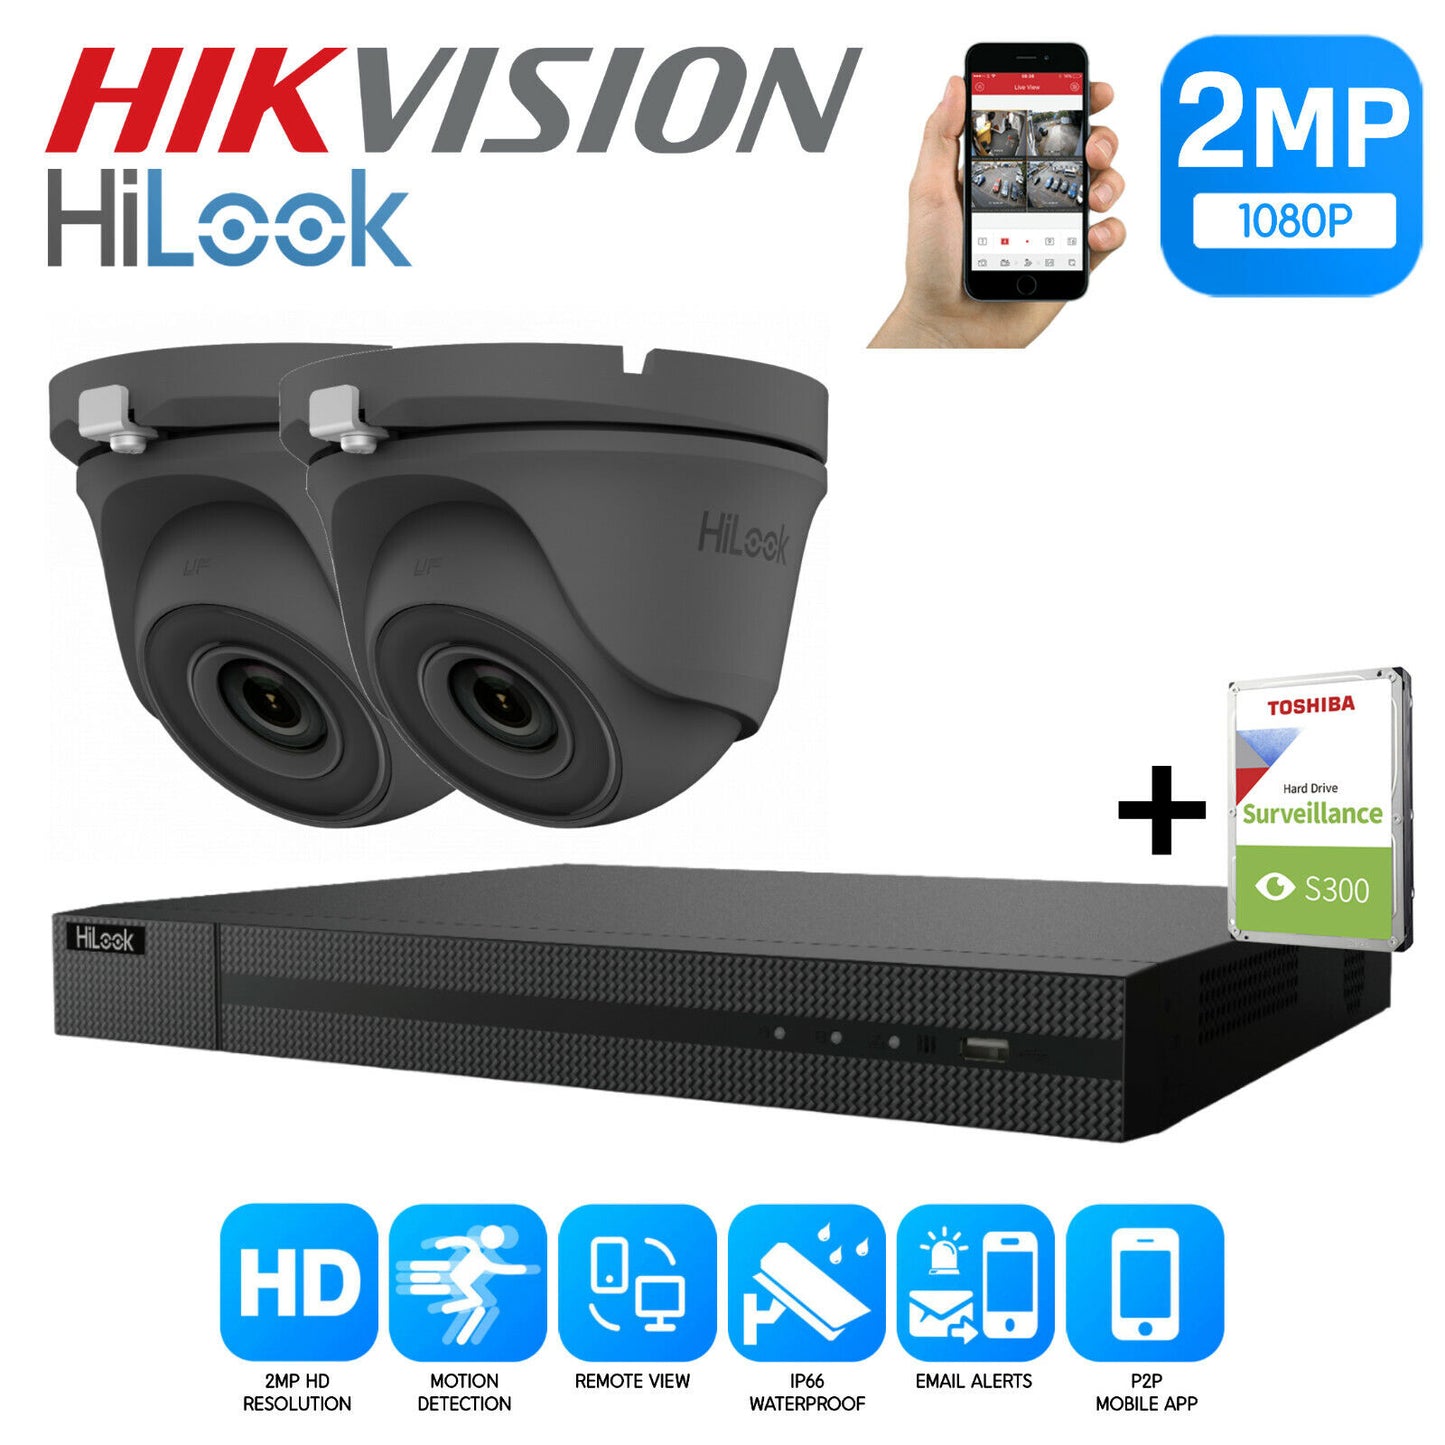 Hikvision Hilook 1080P HD DVR outdoor nightvision CCTV system camera kit 4ch DVR 2xCameras (gray) 1TB HDD